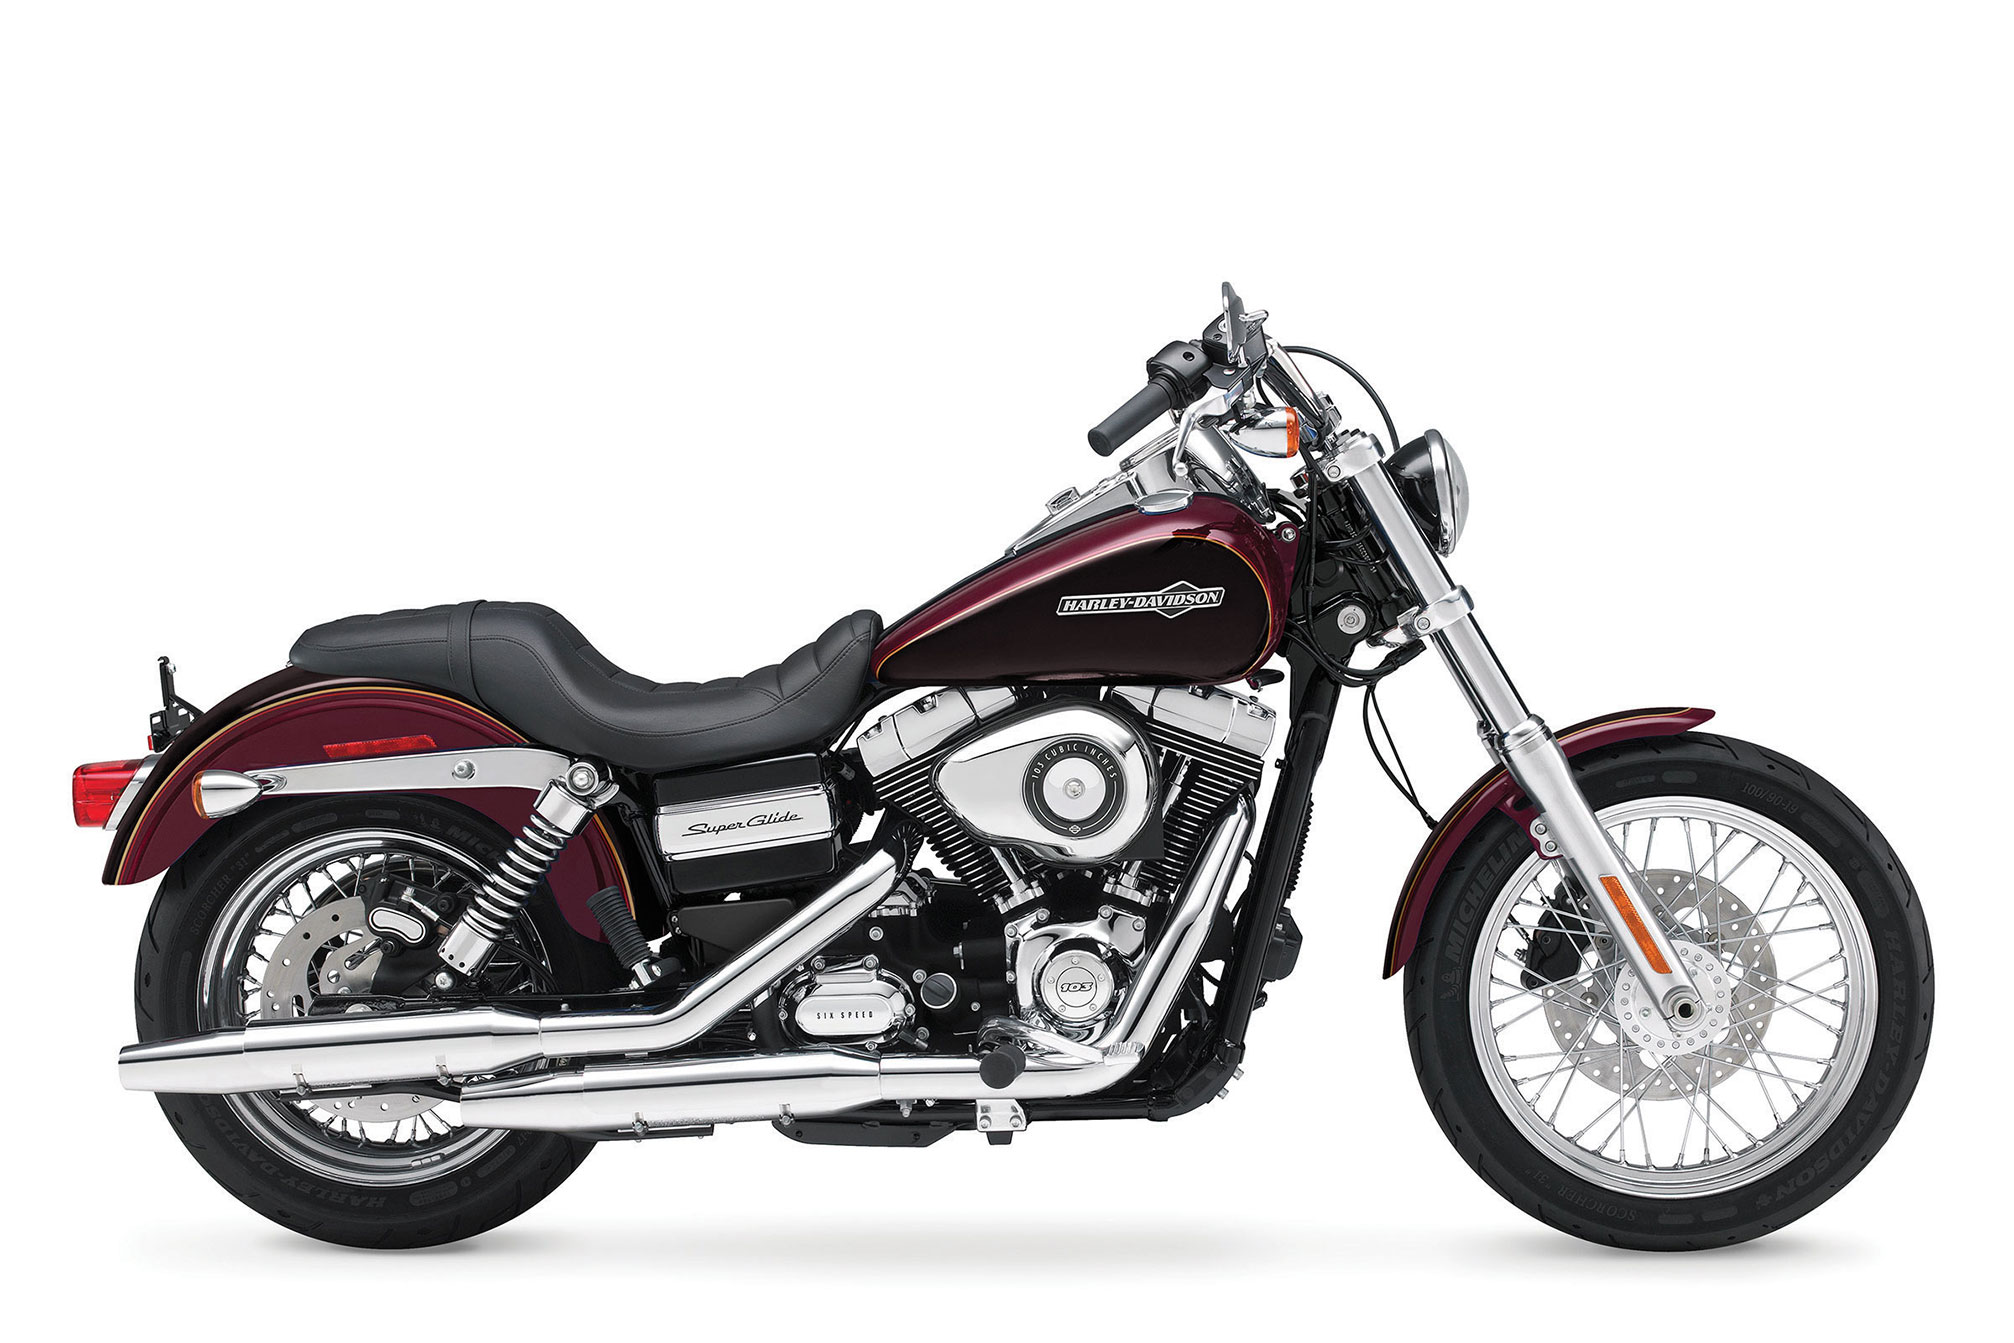 2014 Harley Davidson Fxdc Super Glide Custom Review